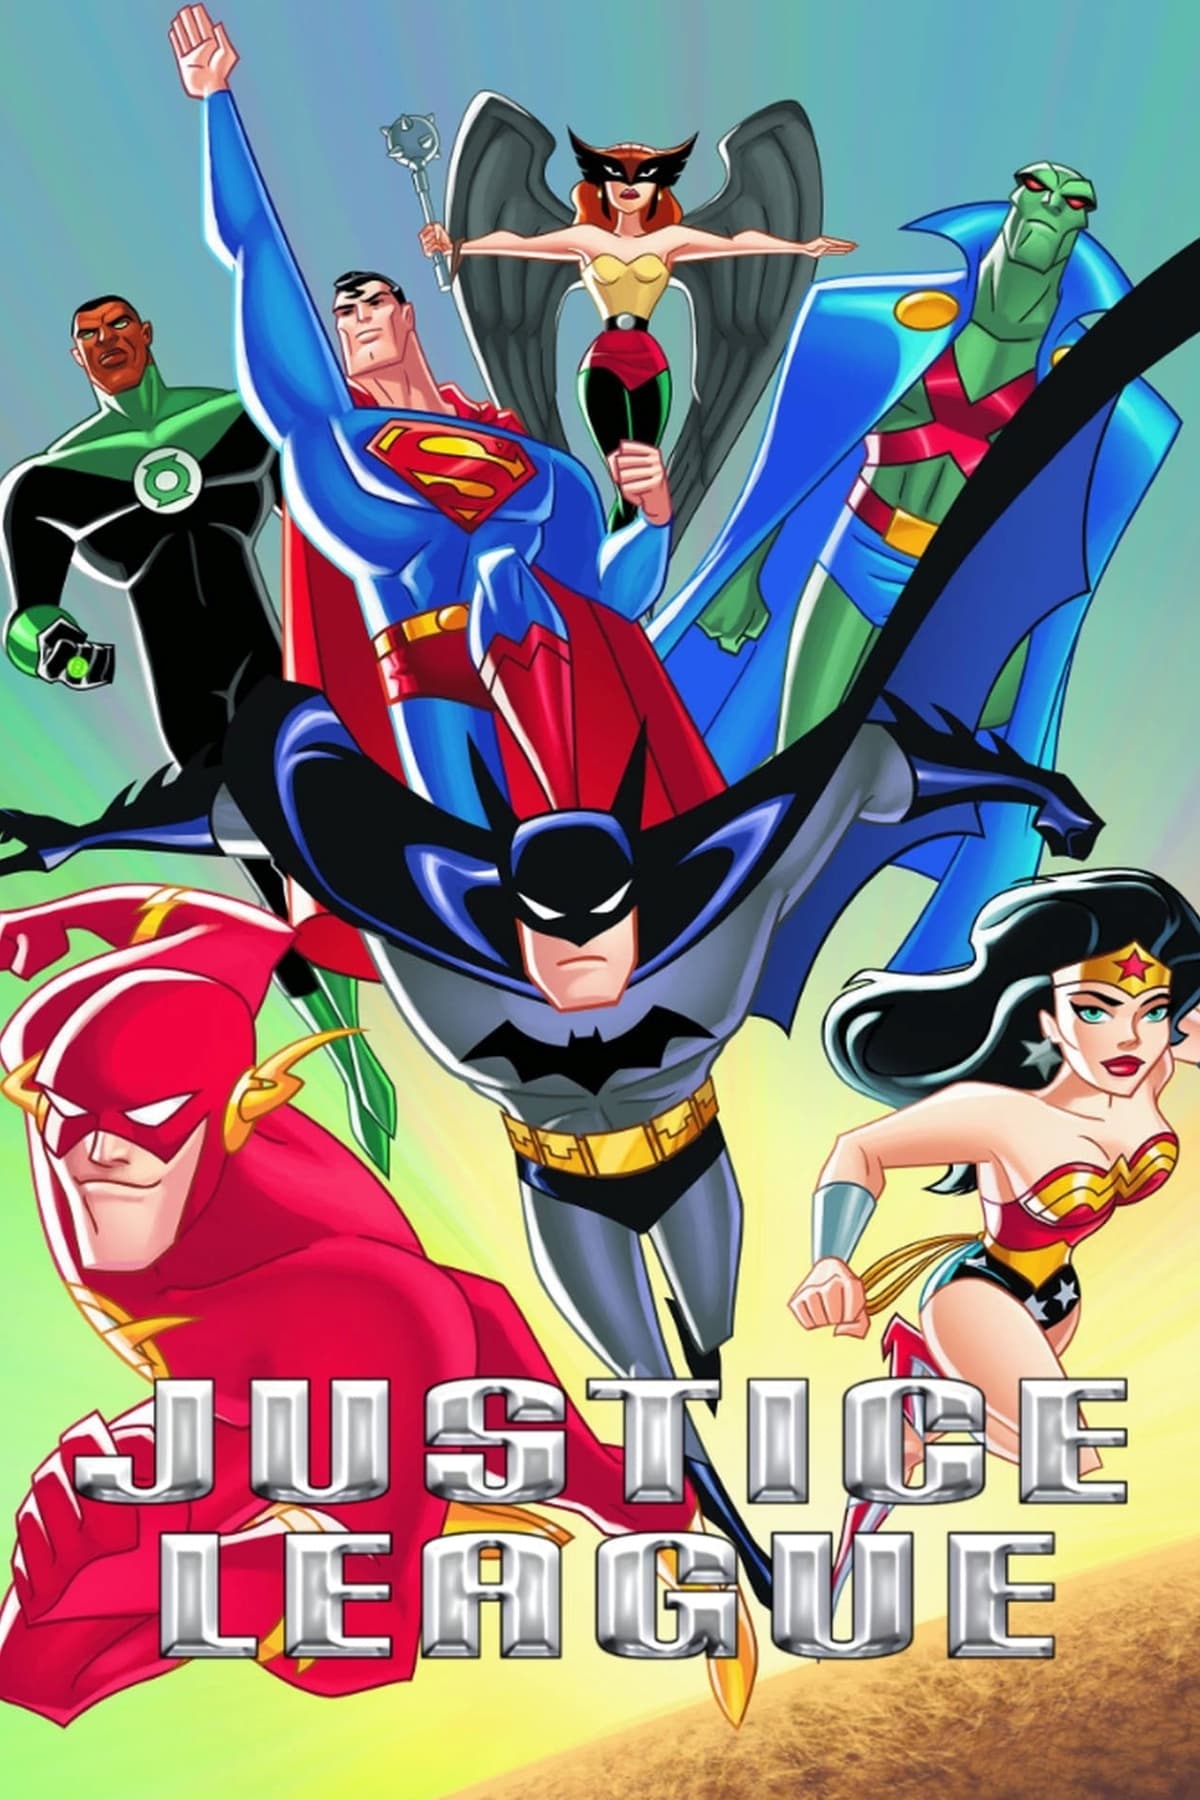 La liga de la justicia (2001)